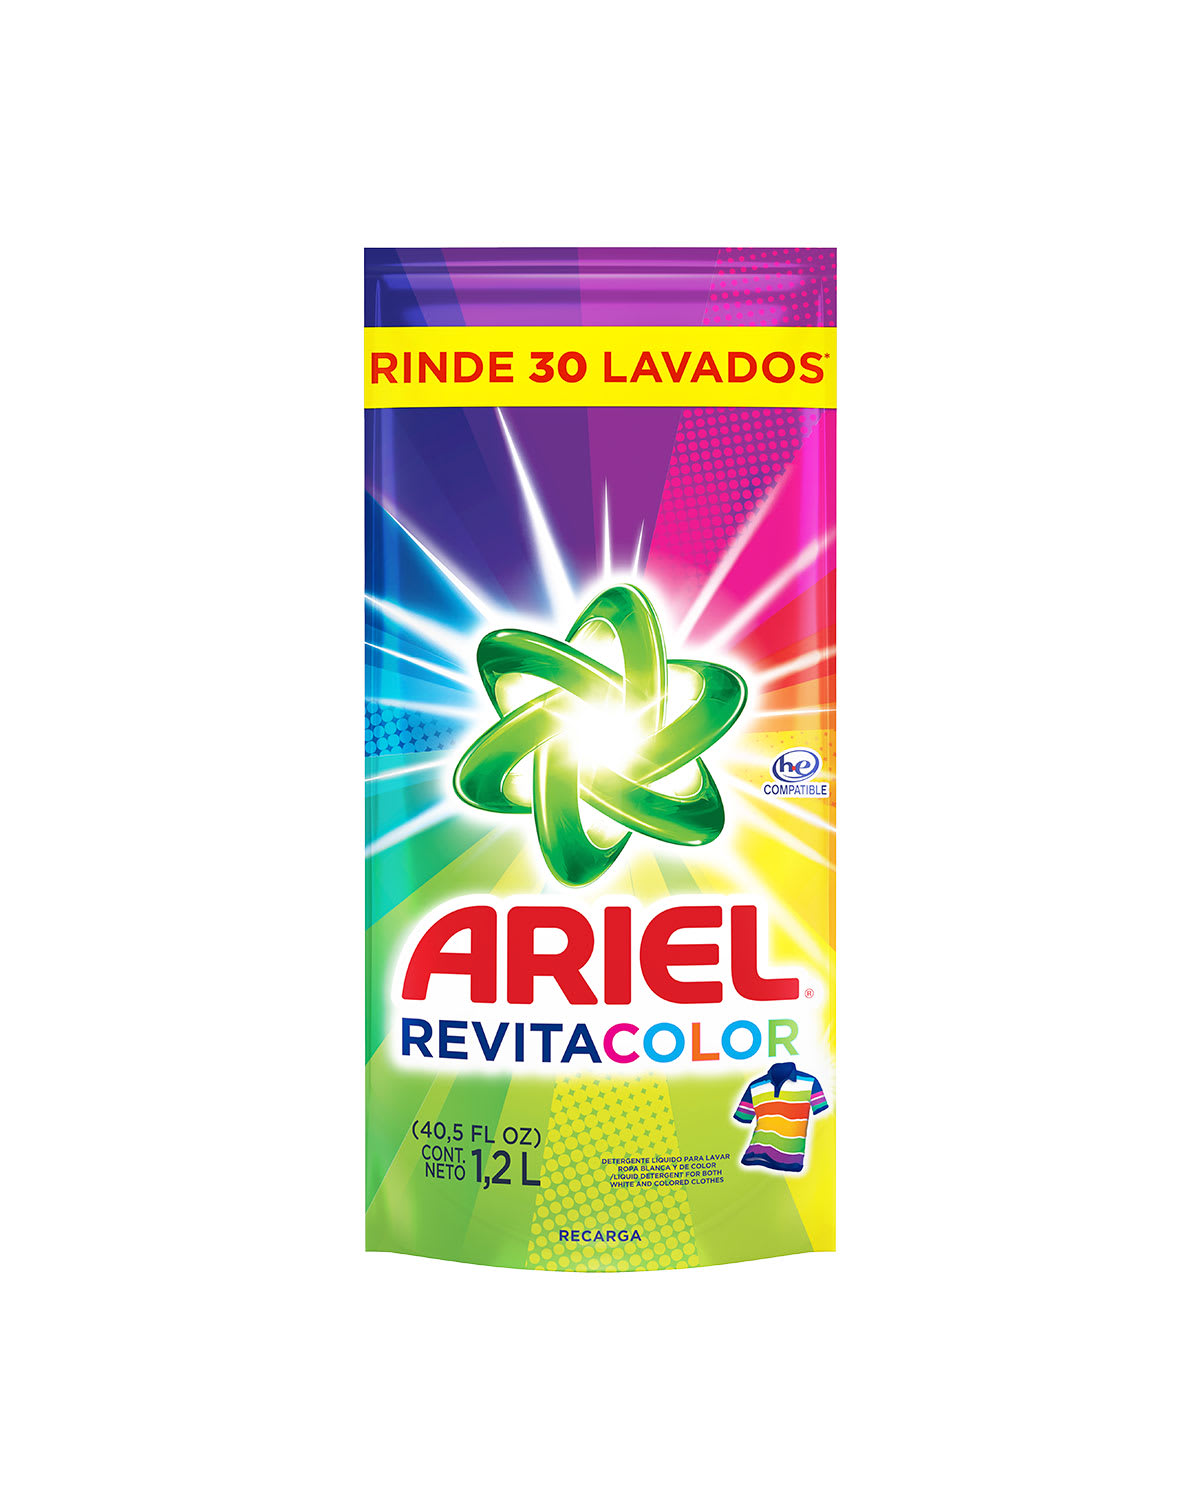 Detergente líquido ariel revitacolor | Leonisa